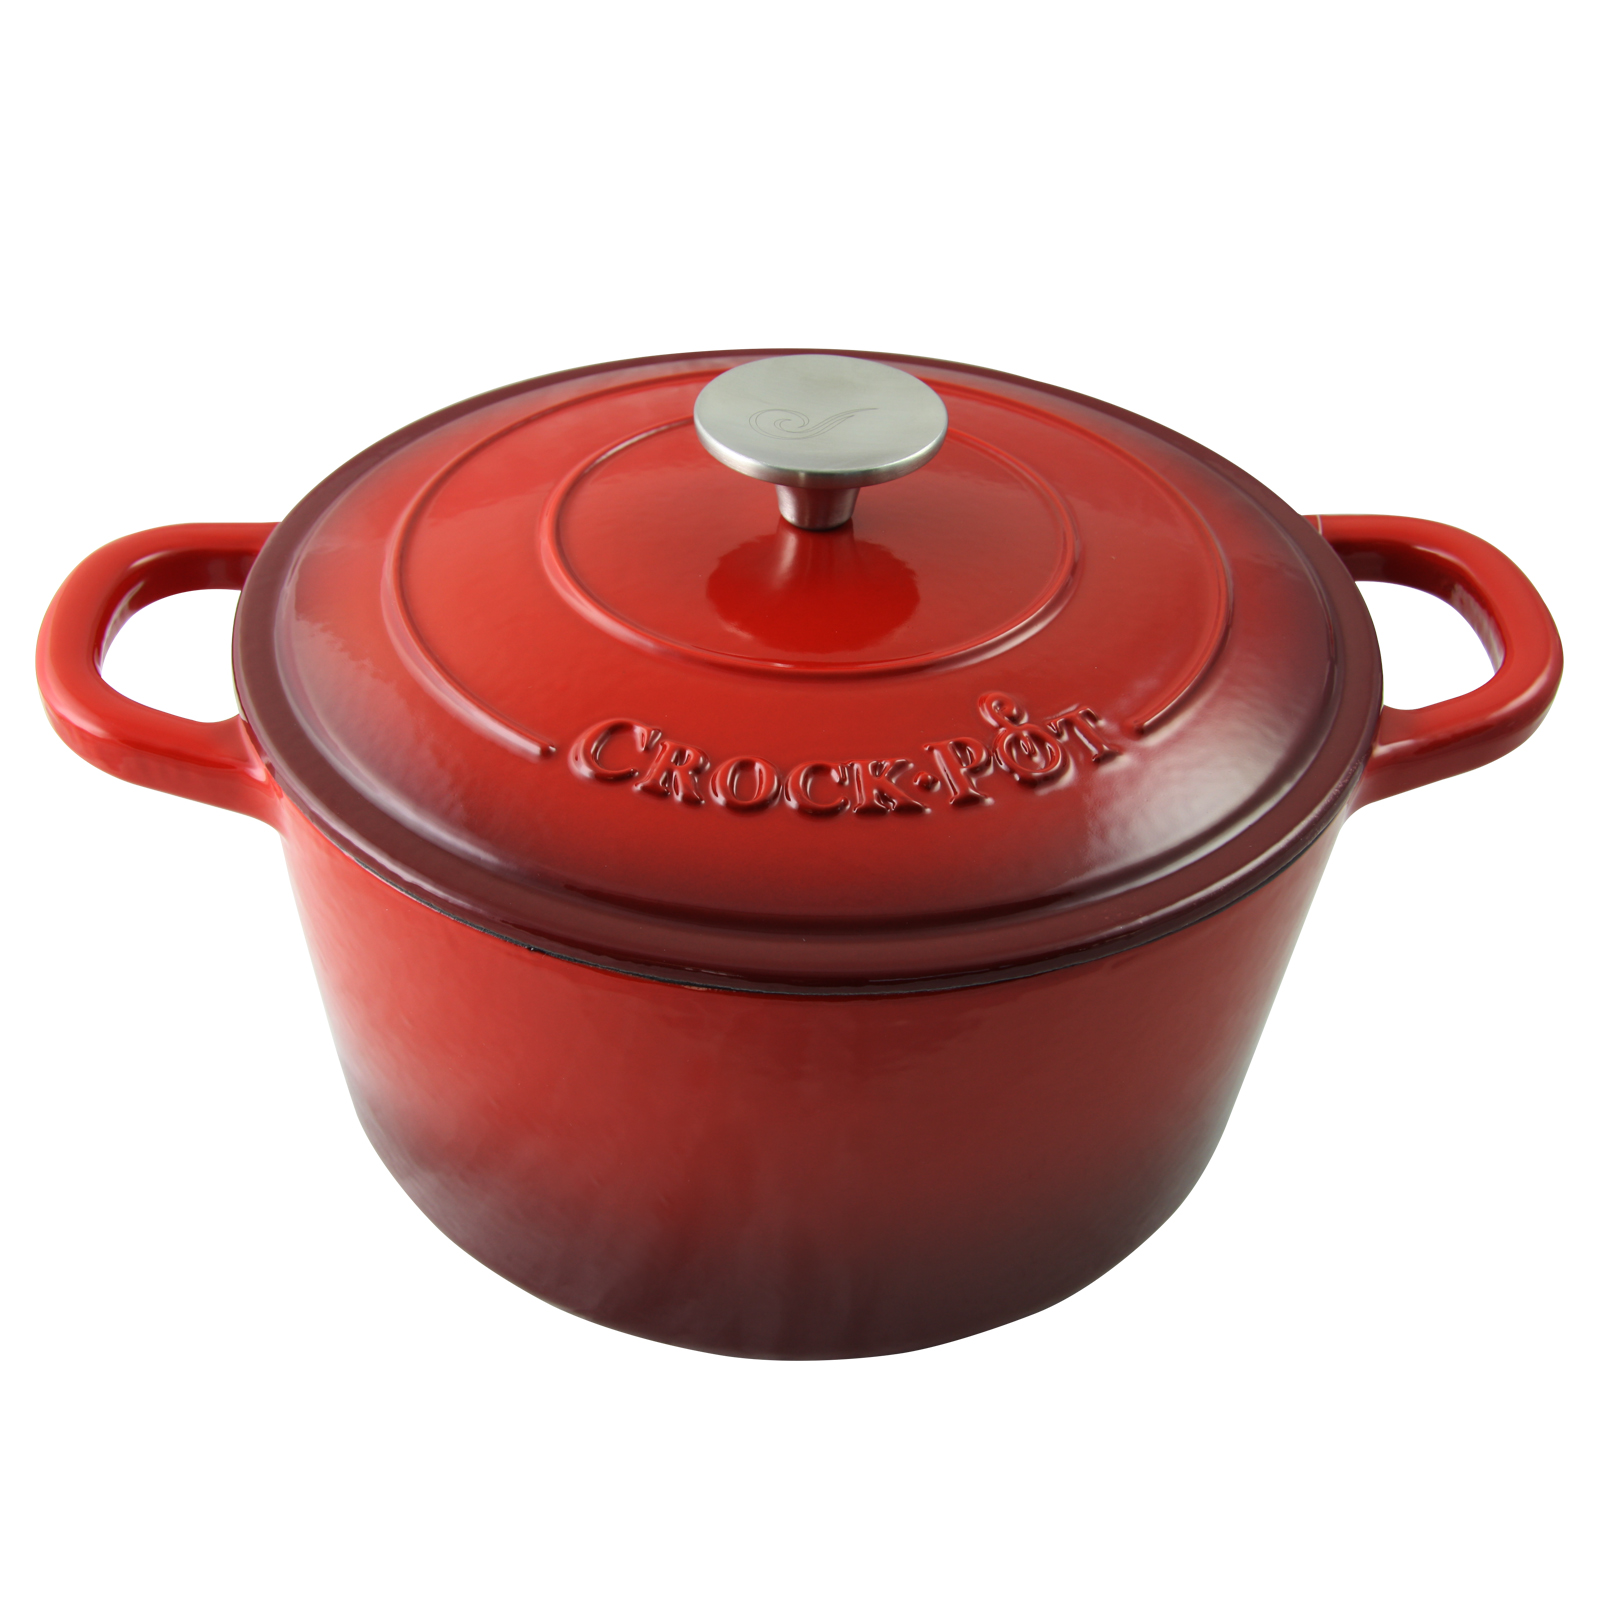 Crock-Pot. Artisan 5 Quart Round Enameled Cast Iron Dutch Oven in Scarlet Red